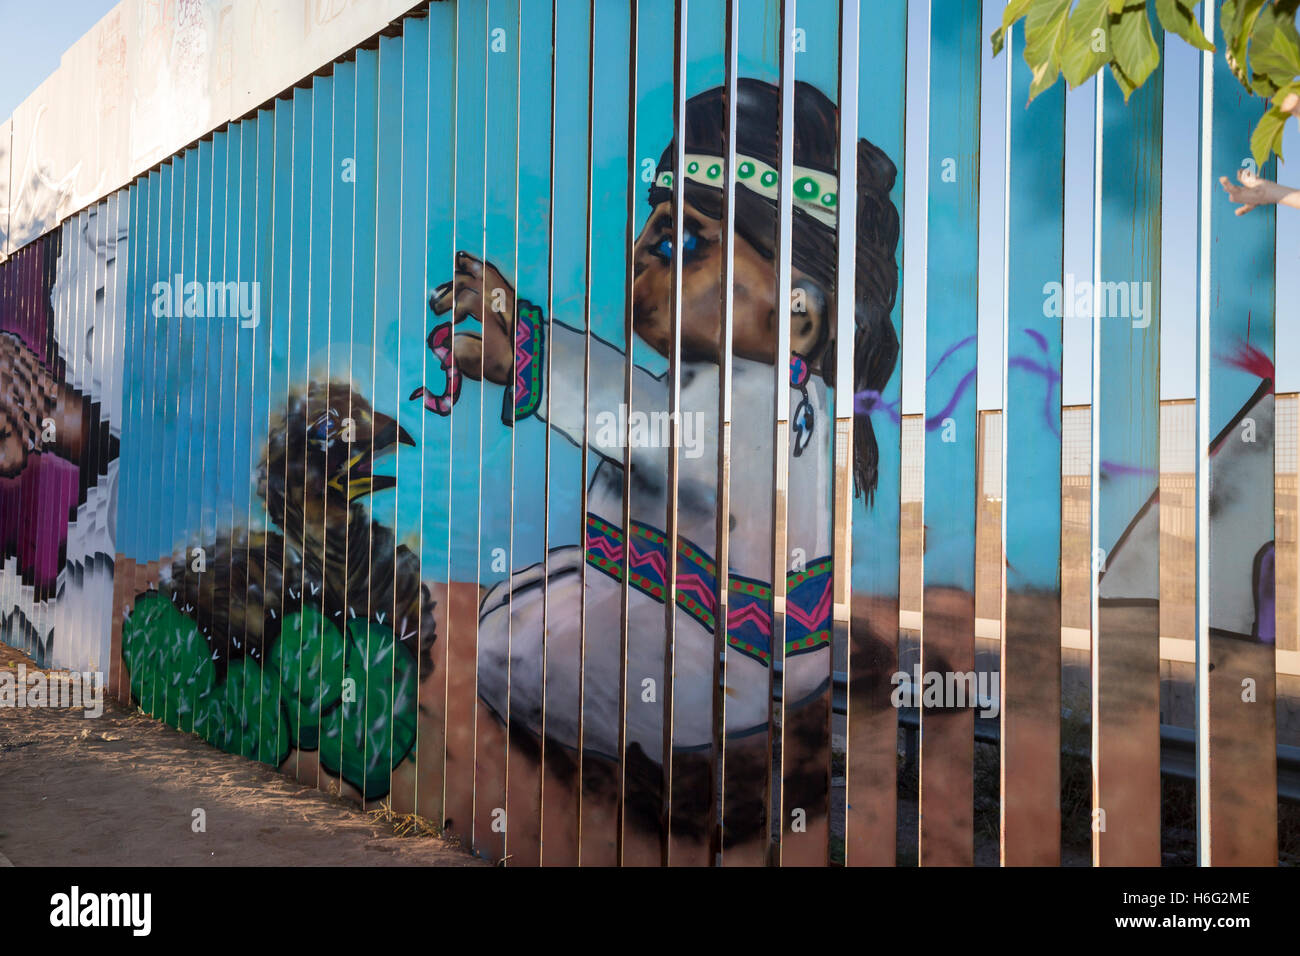 Agua Prieta, Sonora, Mexico - Painting on the U.S.-Mexico border fence. Stock Photo